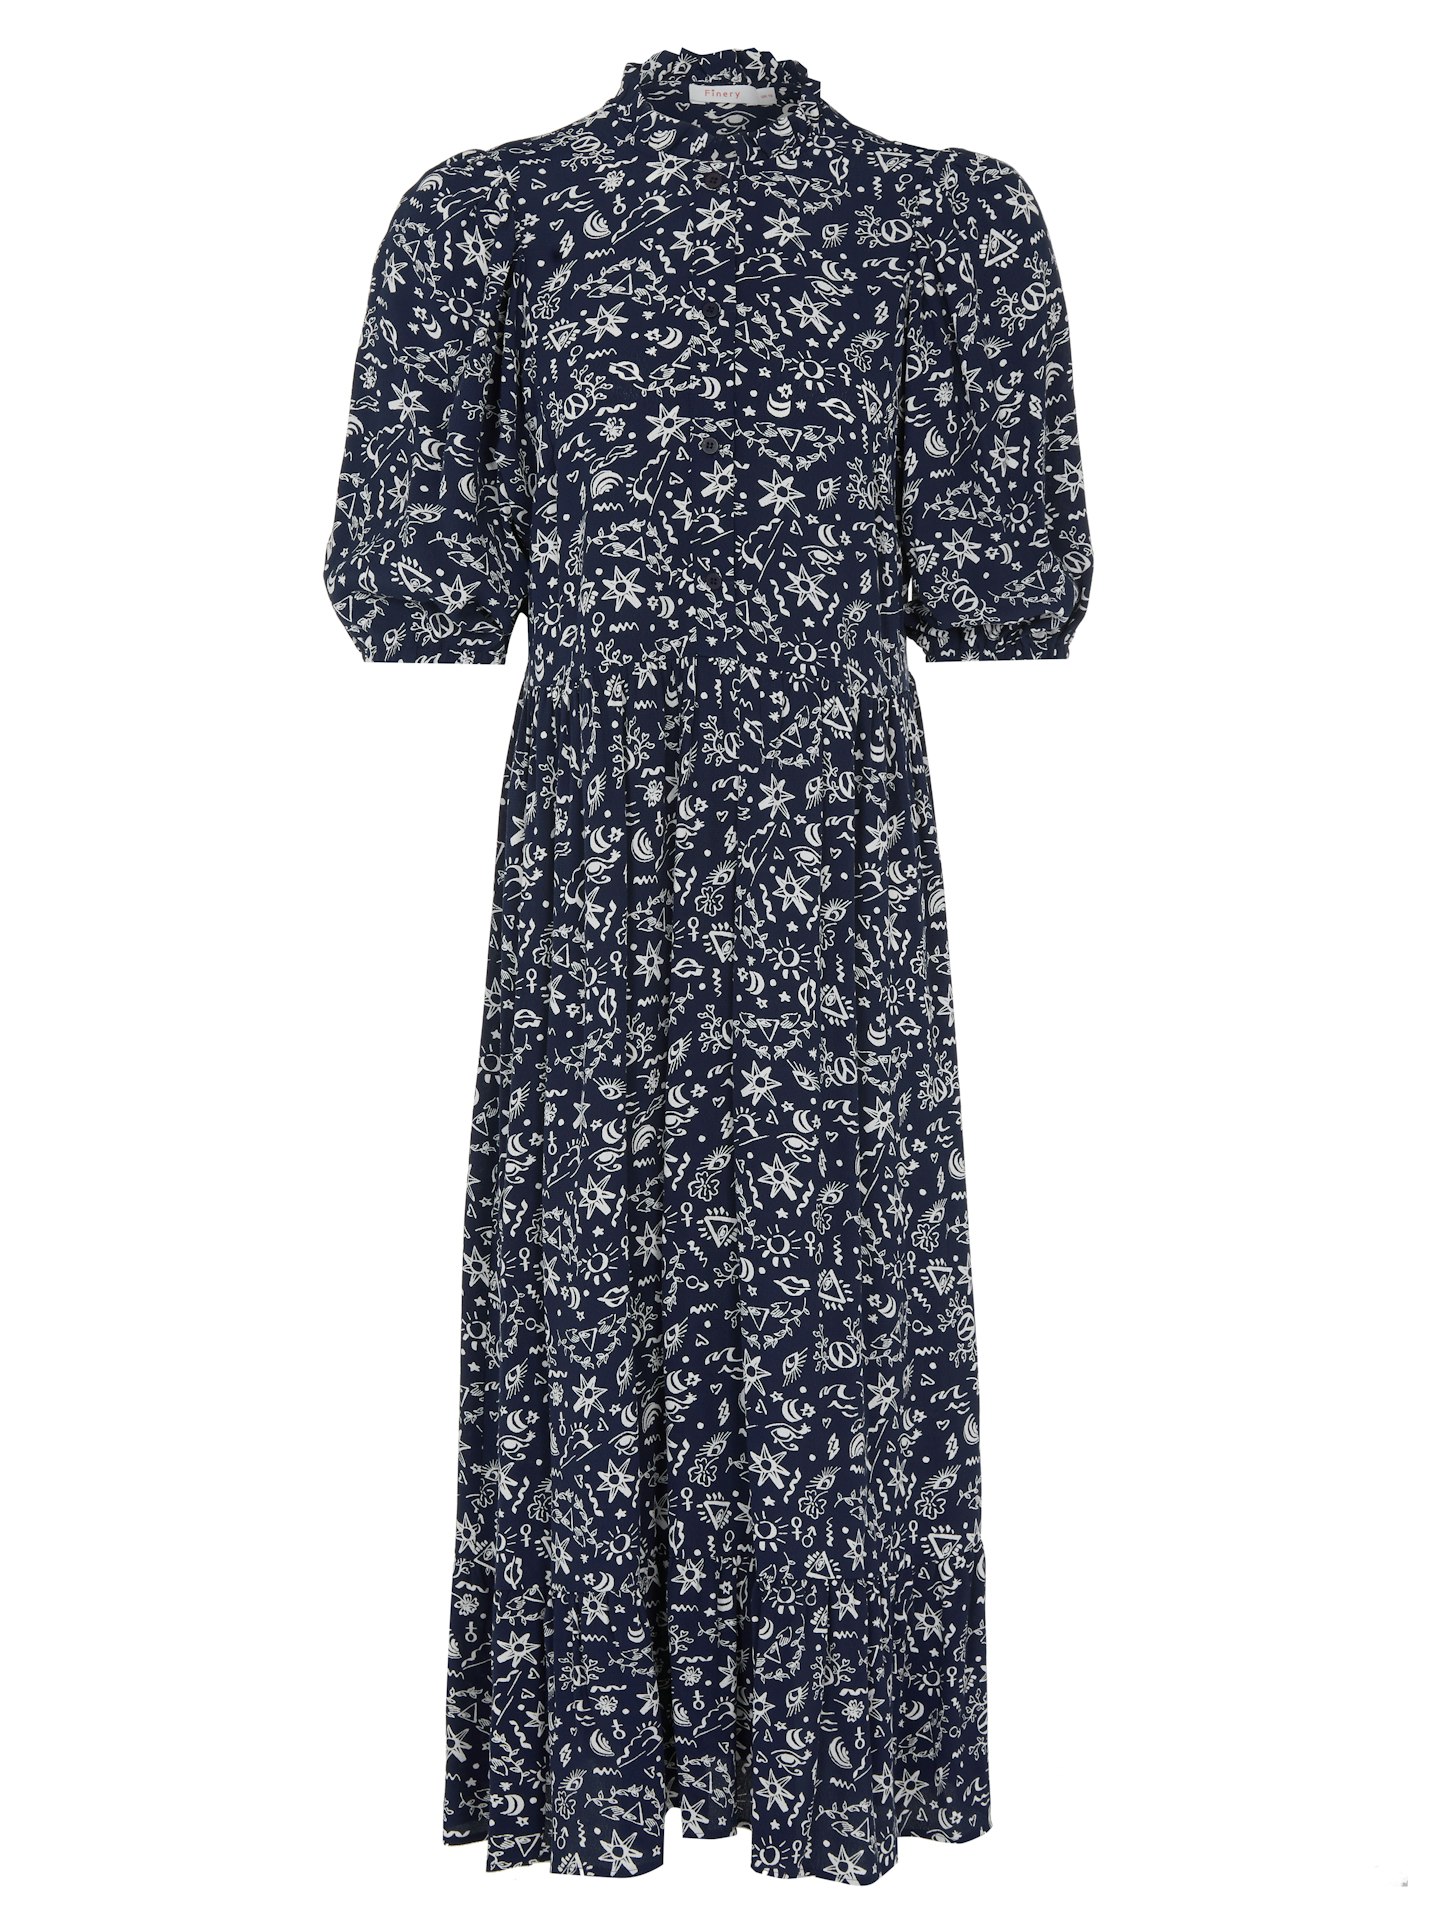 Finery London, Crepe Printed Ruffle Midi Tea Dress, £69